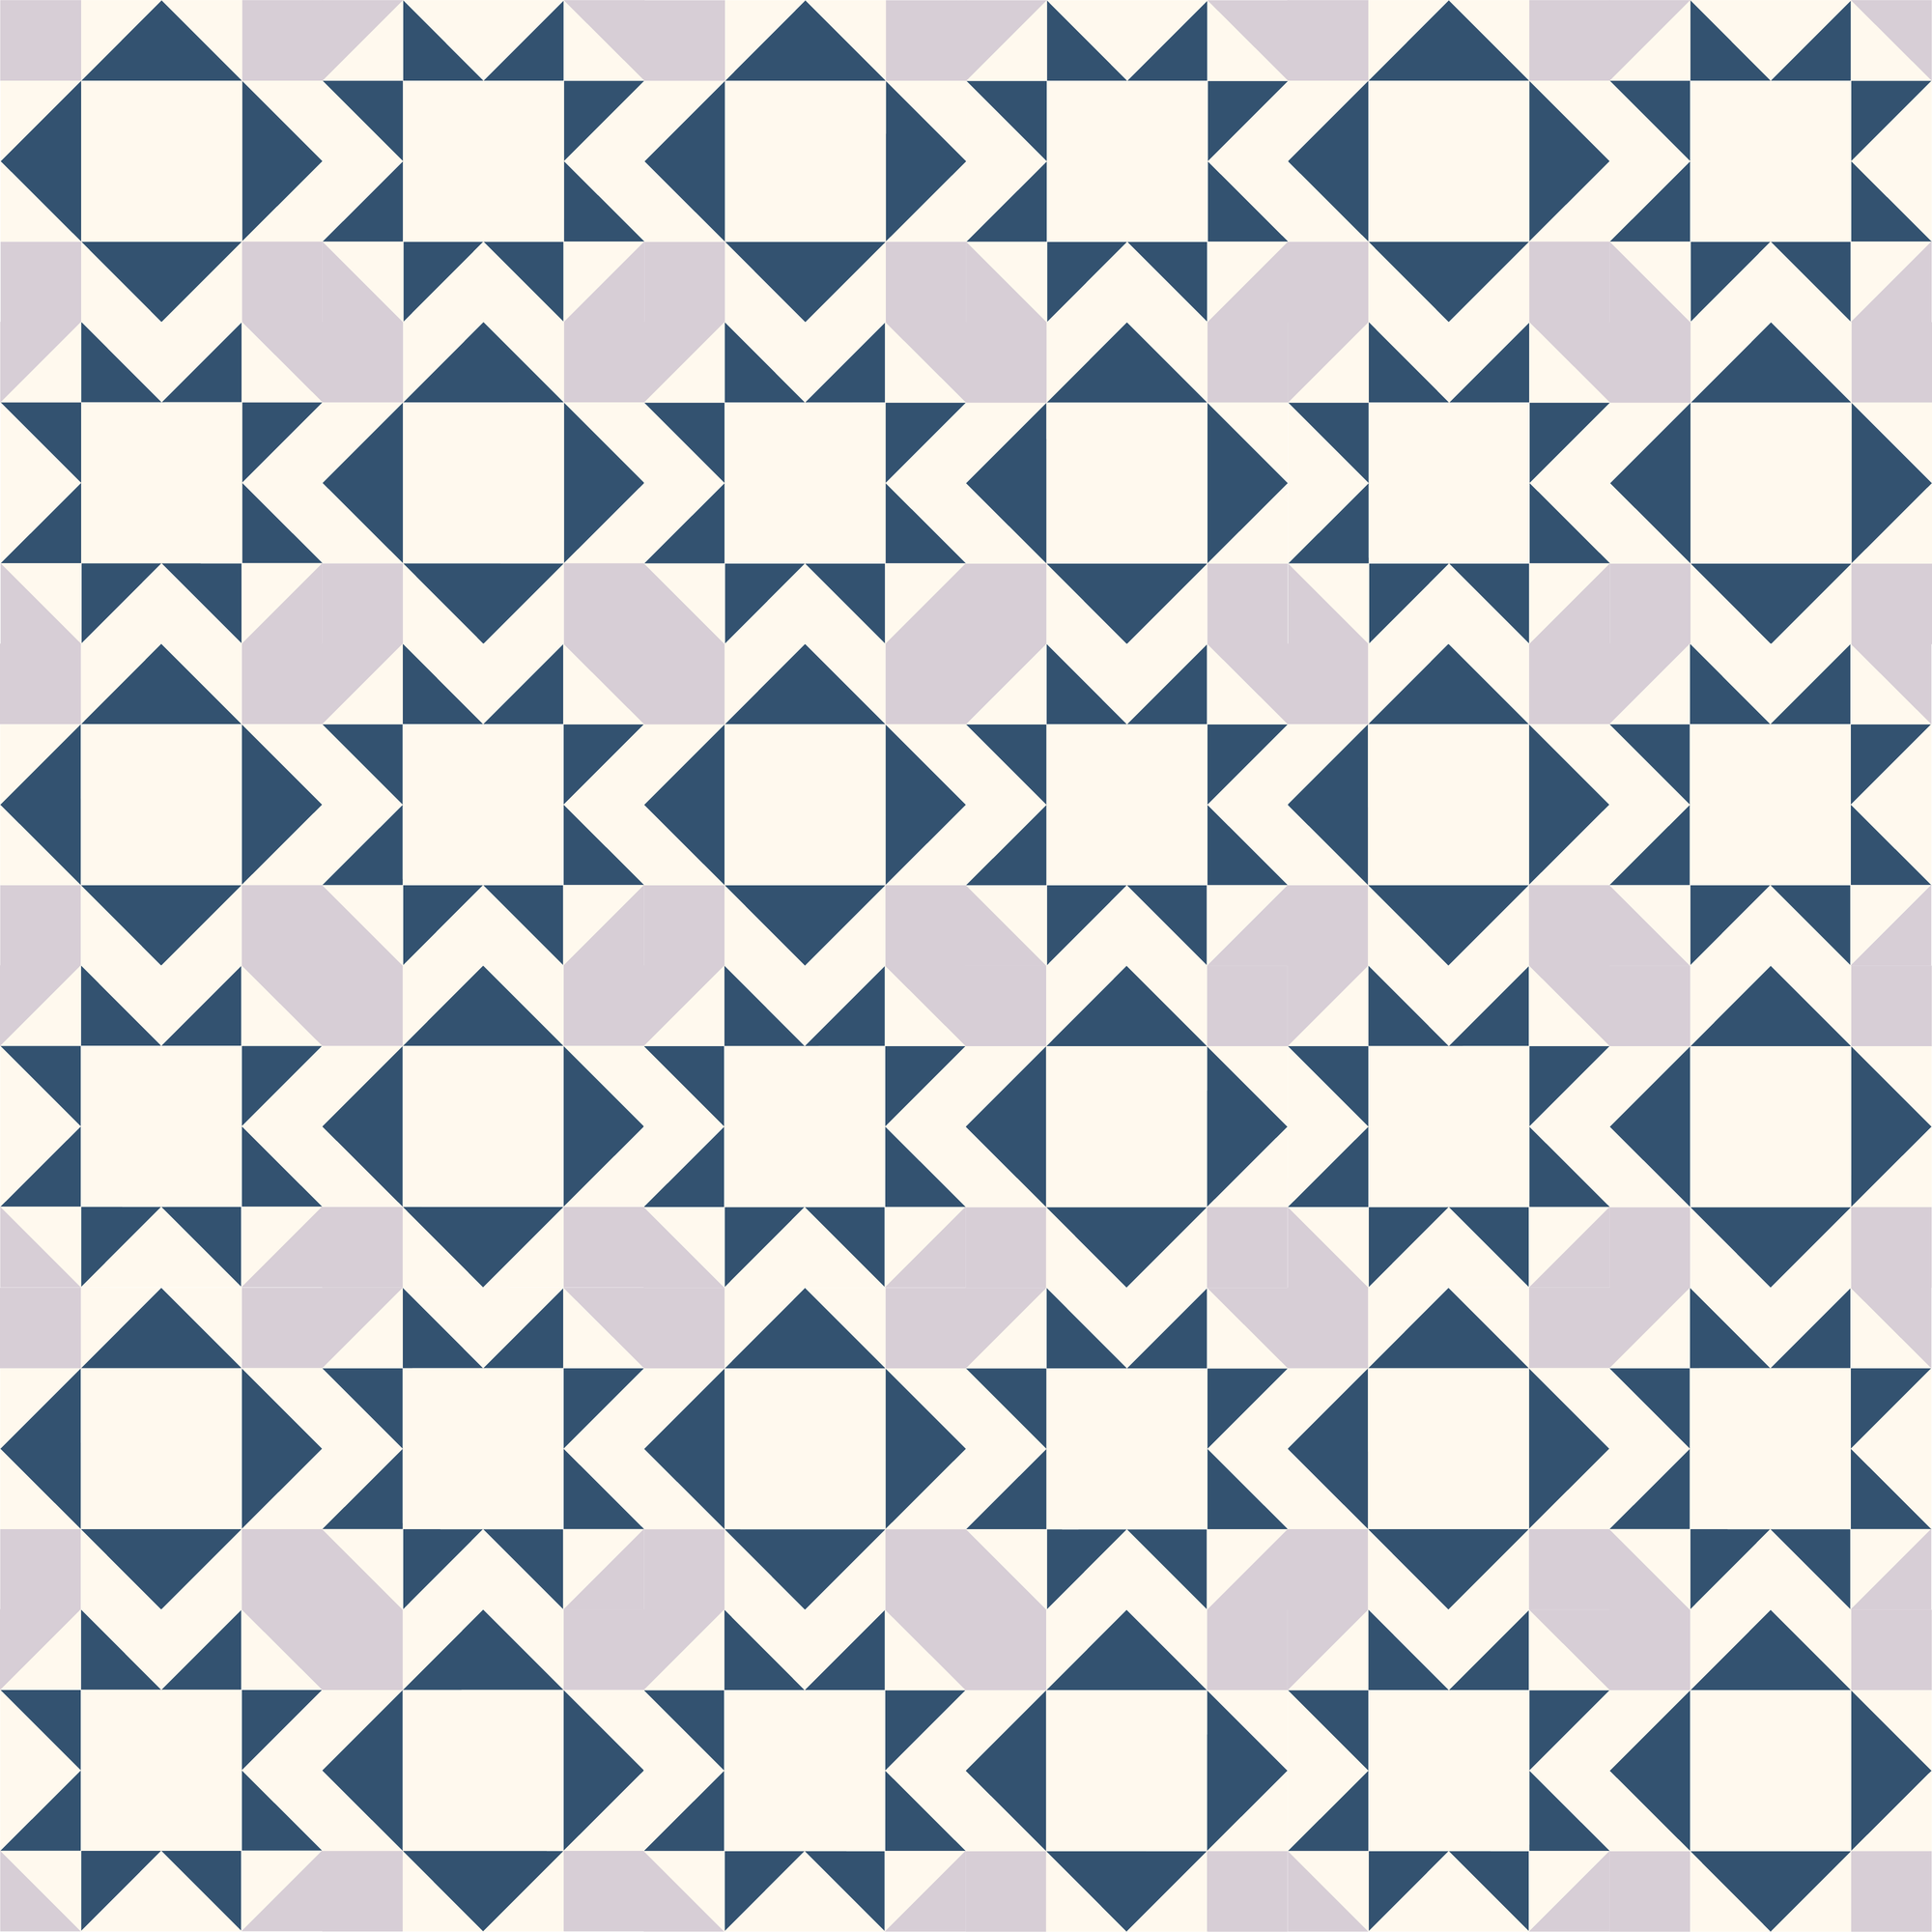 Square Burst 2.0 Quilt Pattern - PRINTED